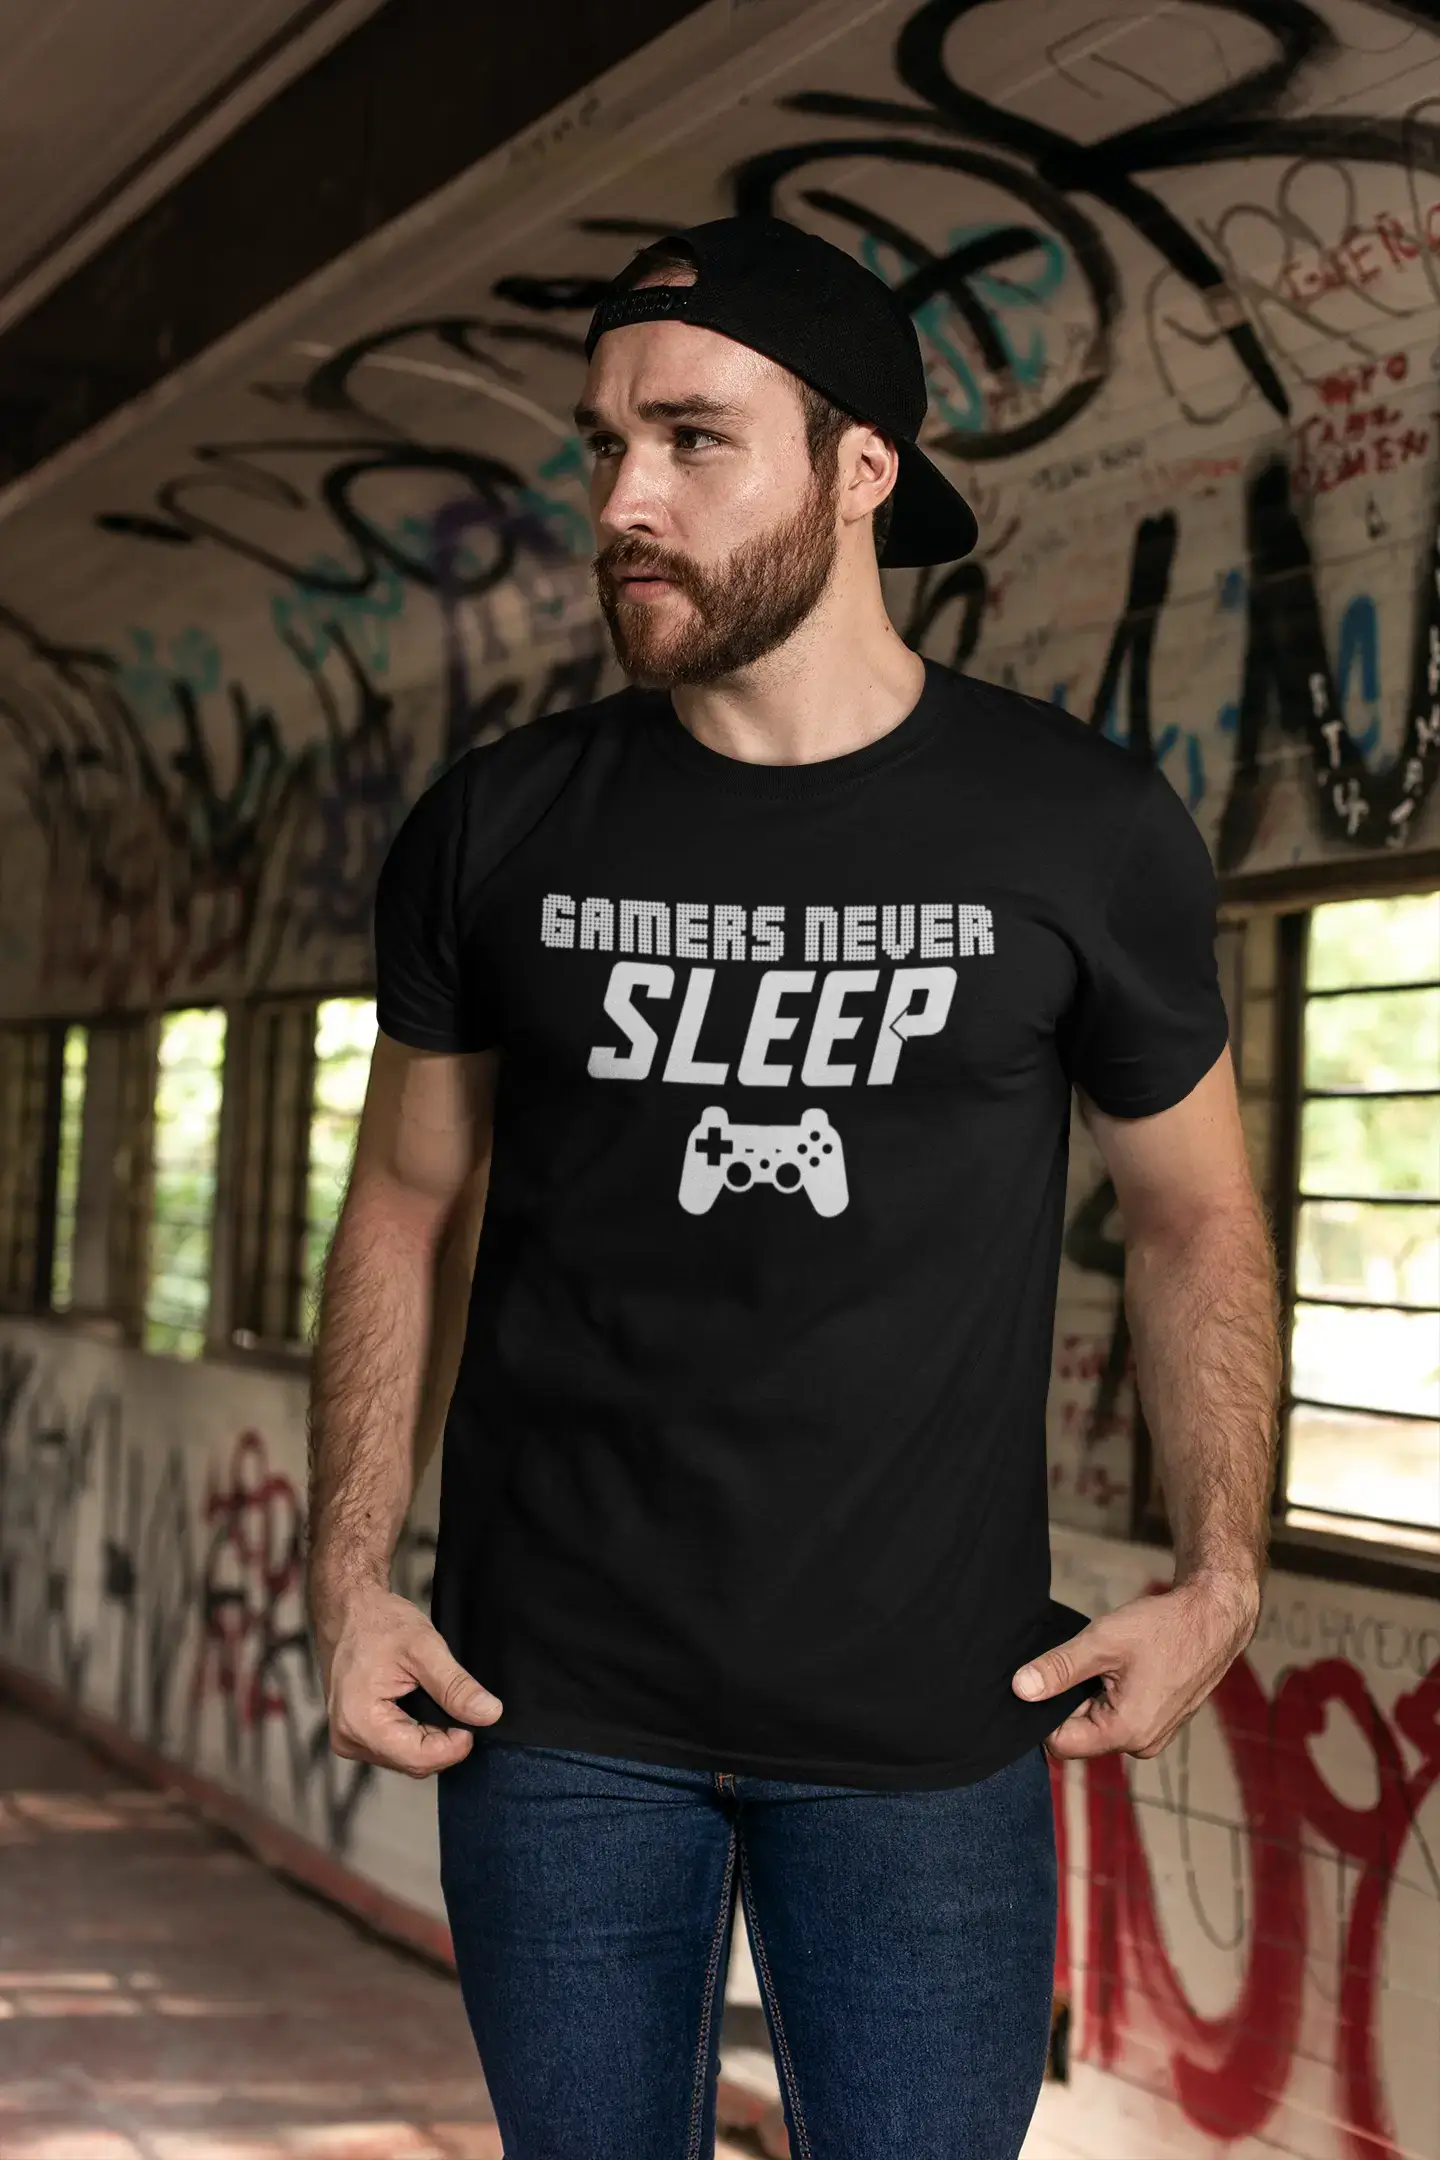 ULTRABASIC Men's Gaming T-Shirt - Gamers Never Sleep - Funny Saying Joke Shirt